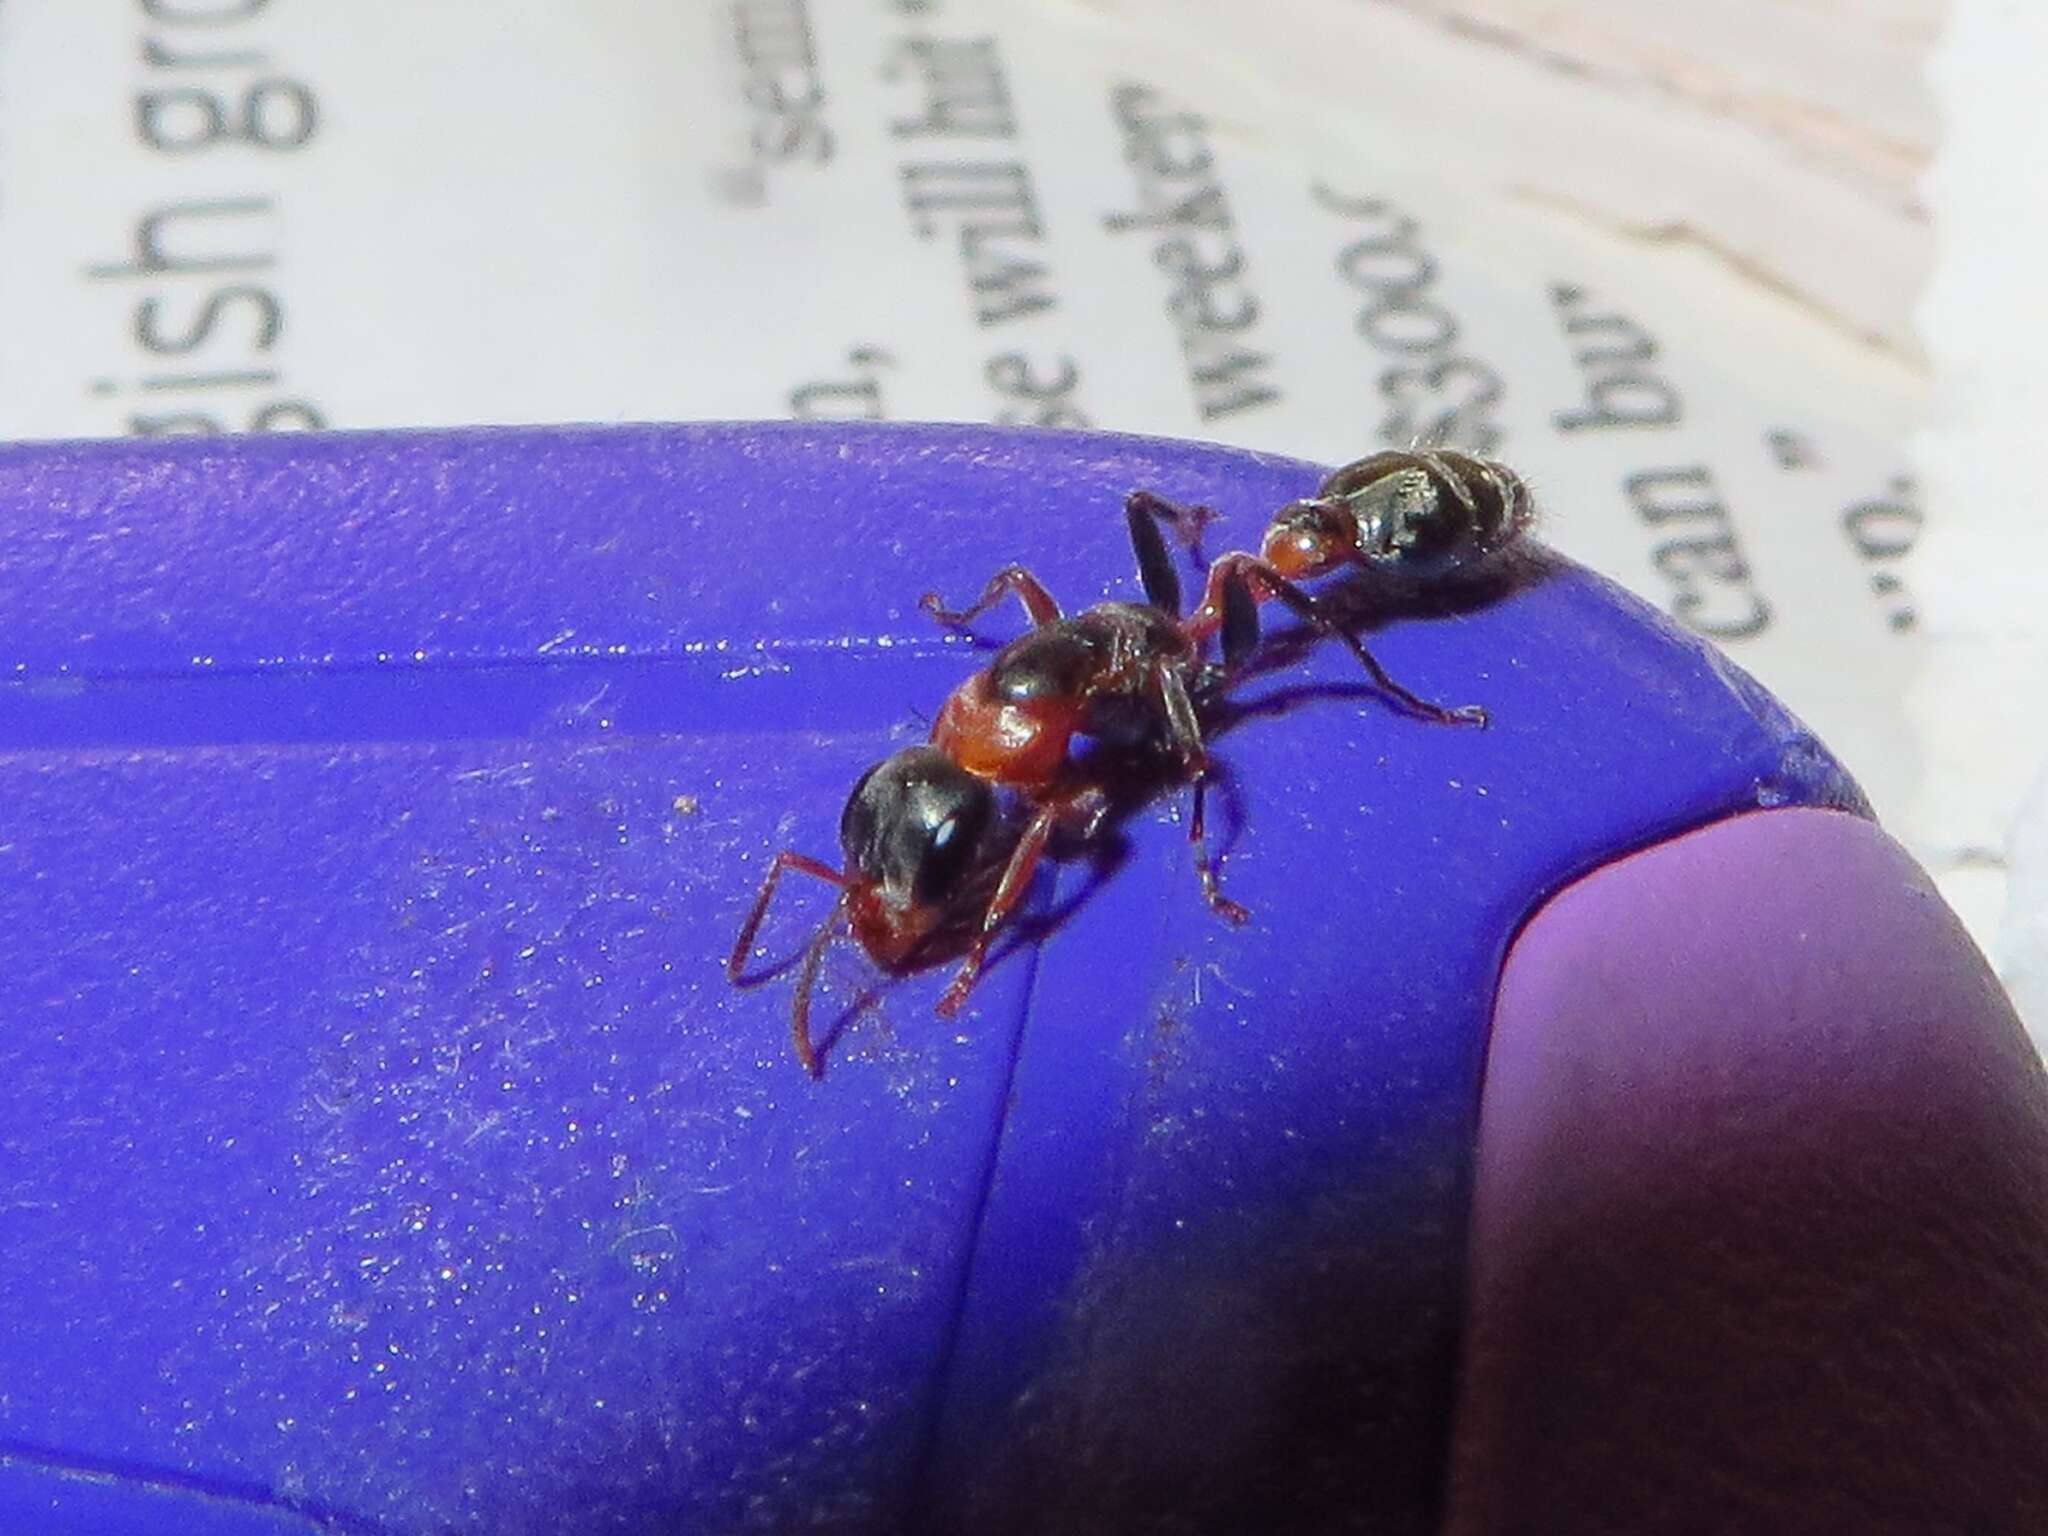 Image of Elongate Twig Ant